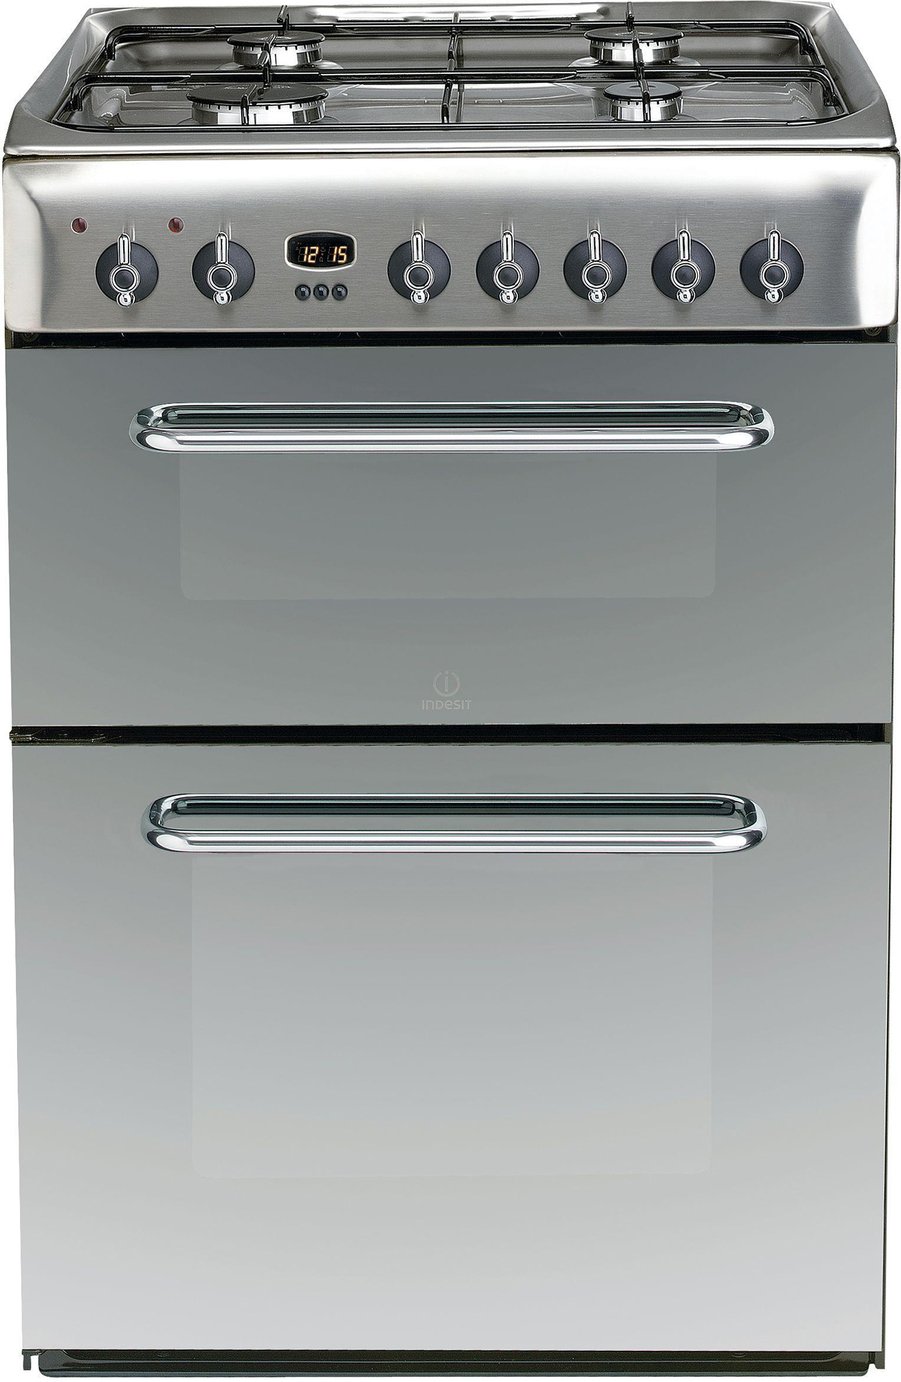 Indesit KDP60SE S 60cm Double Oven Dual Fuel Cooker - Silver